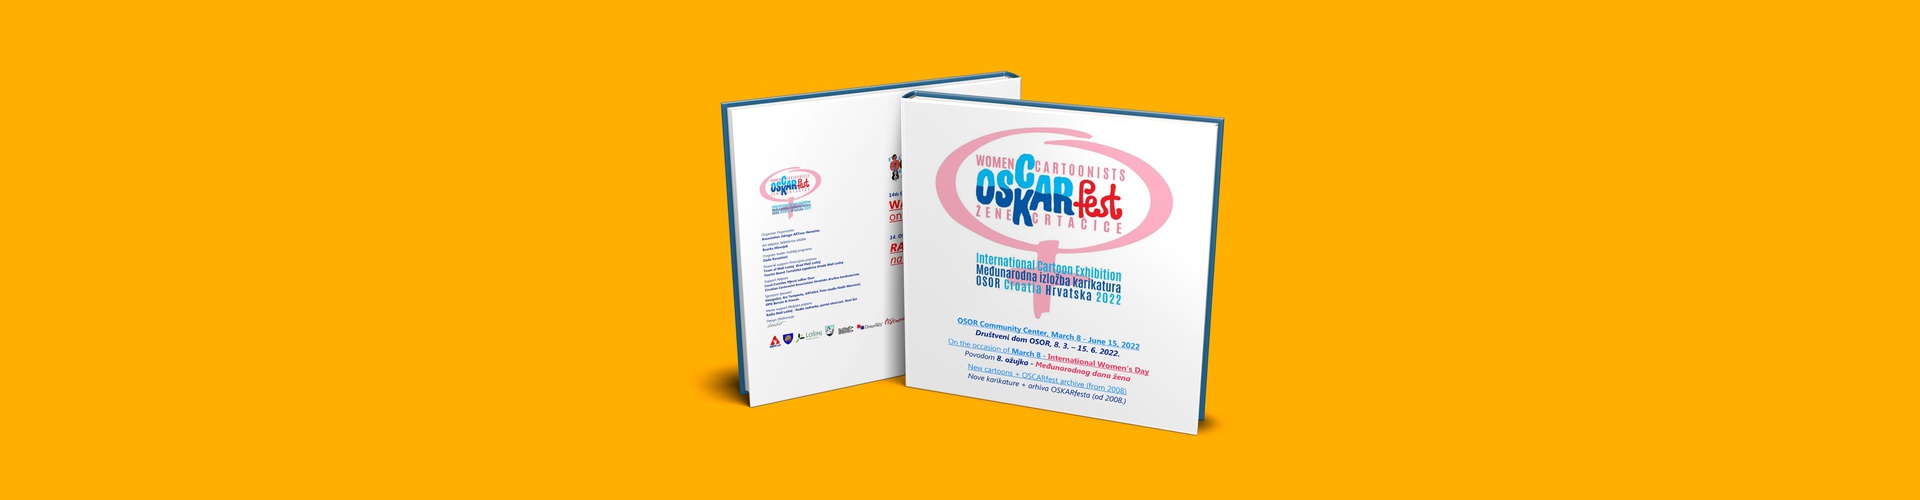 Catalog of the Women's OSCARfest 2022 - CROATIA